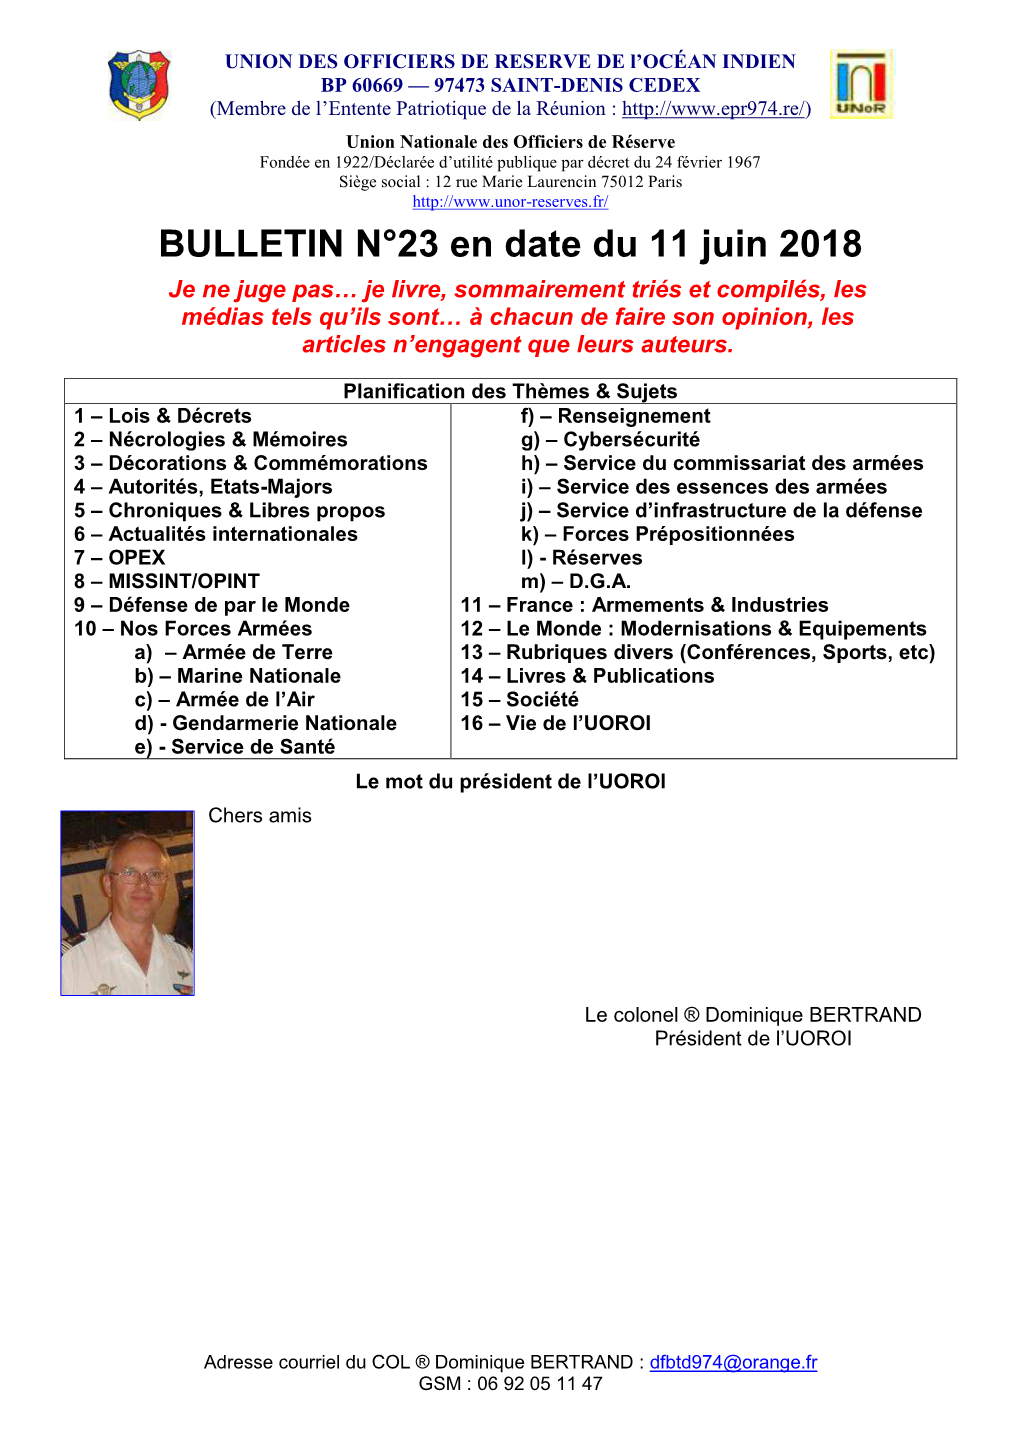 BULLETIN N°23 En Date Du 11 Juin 2018